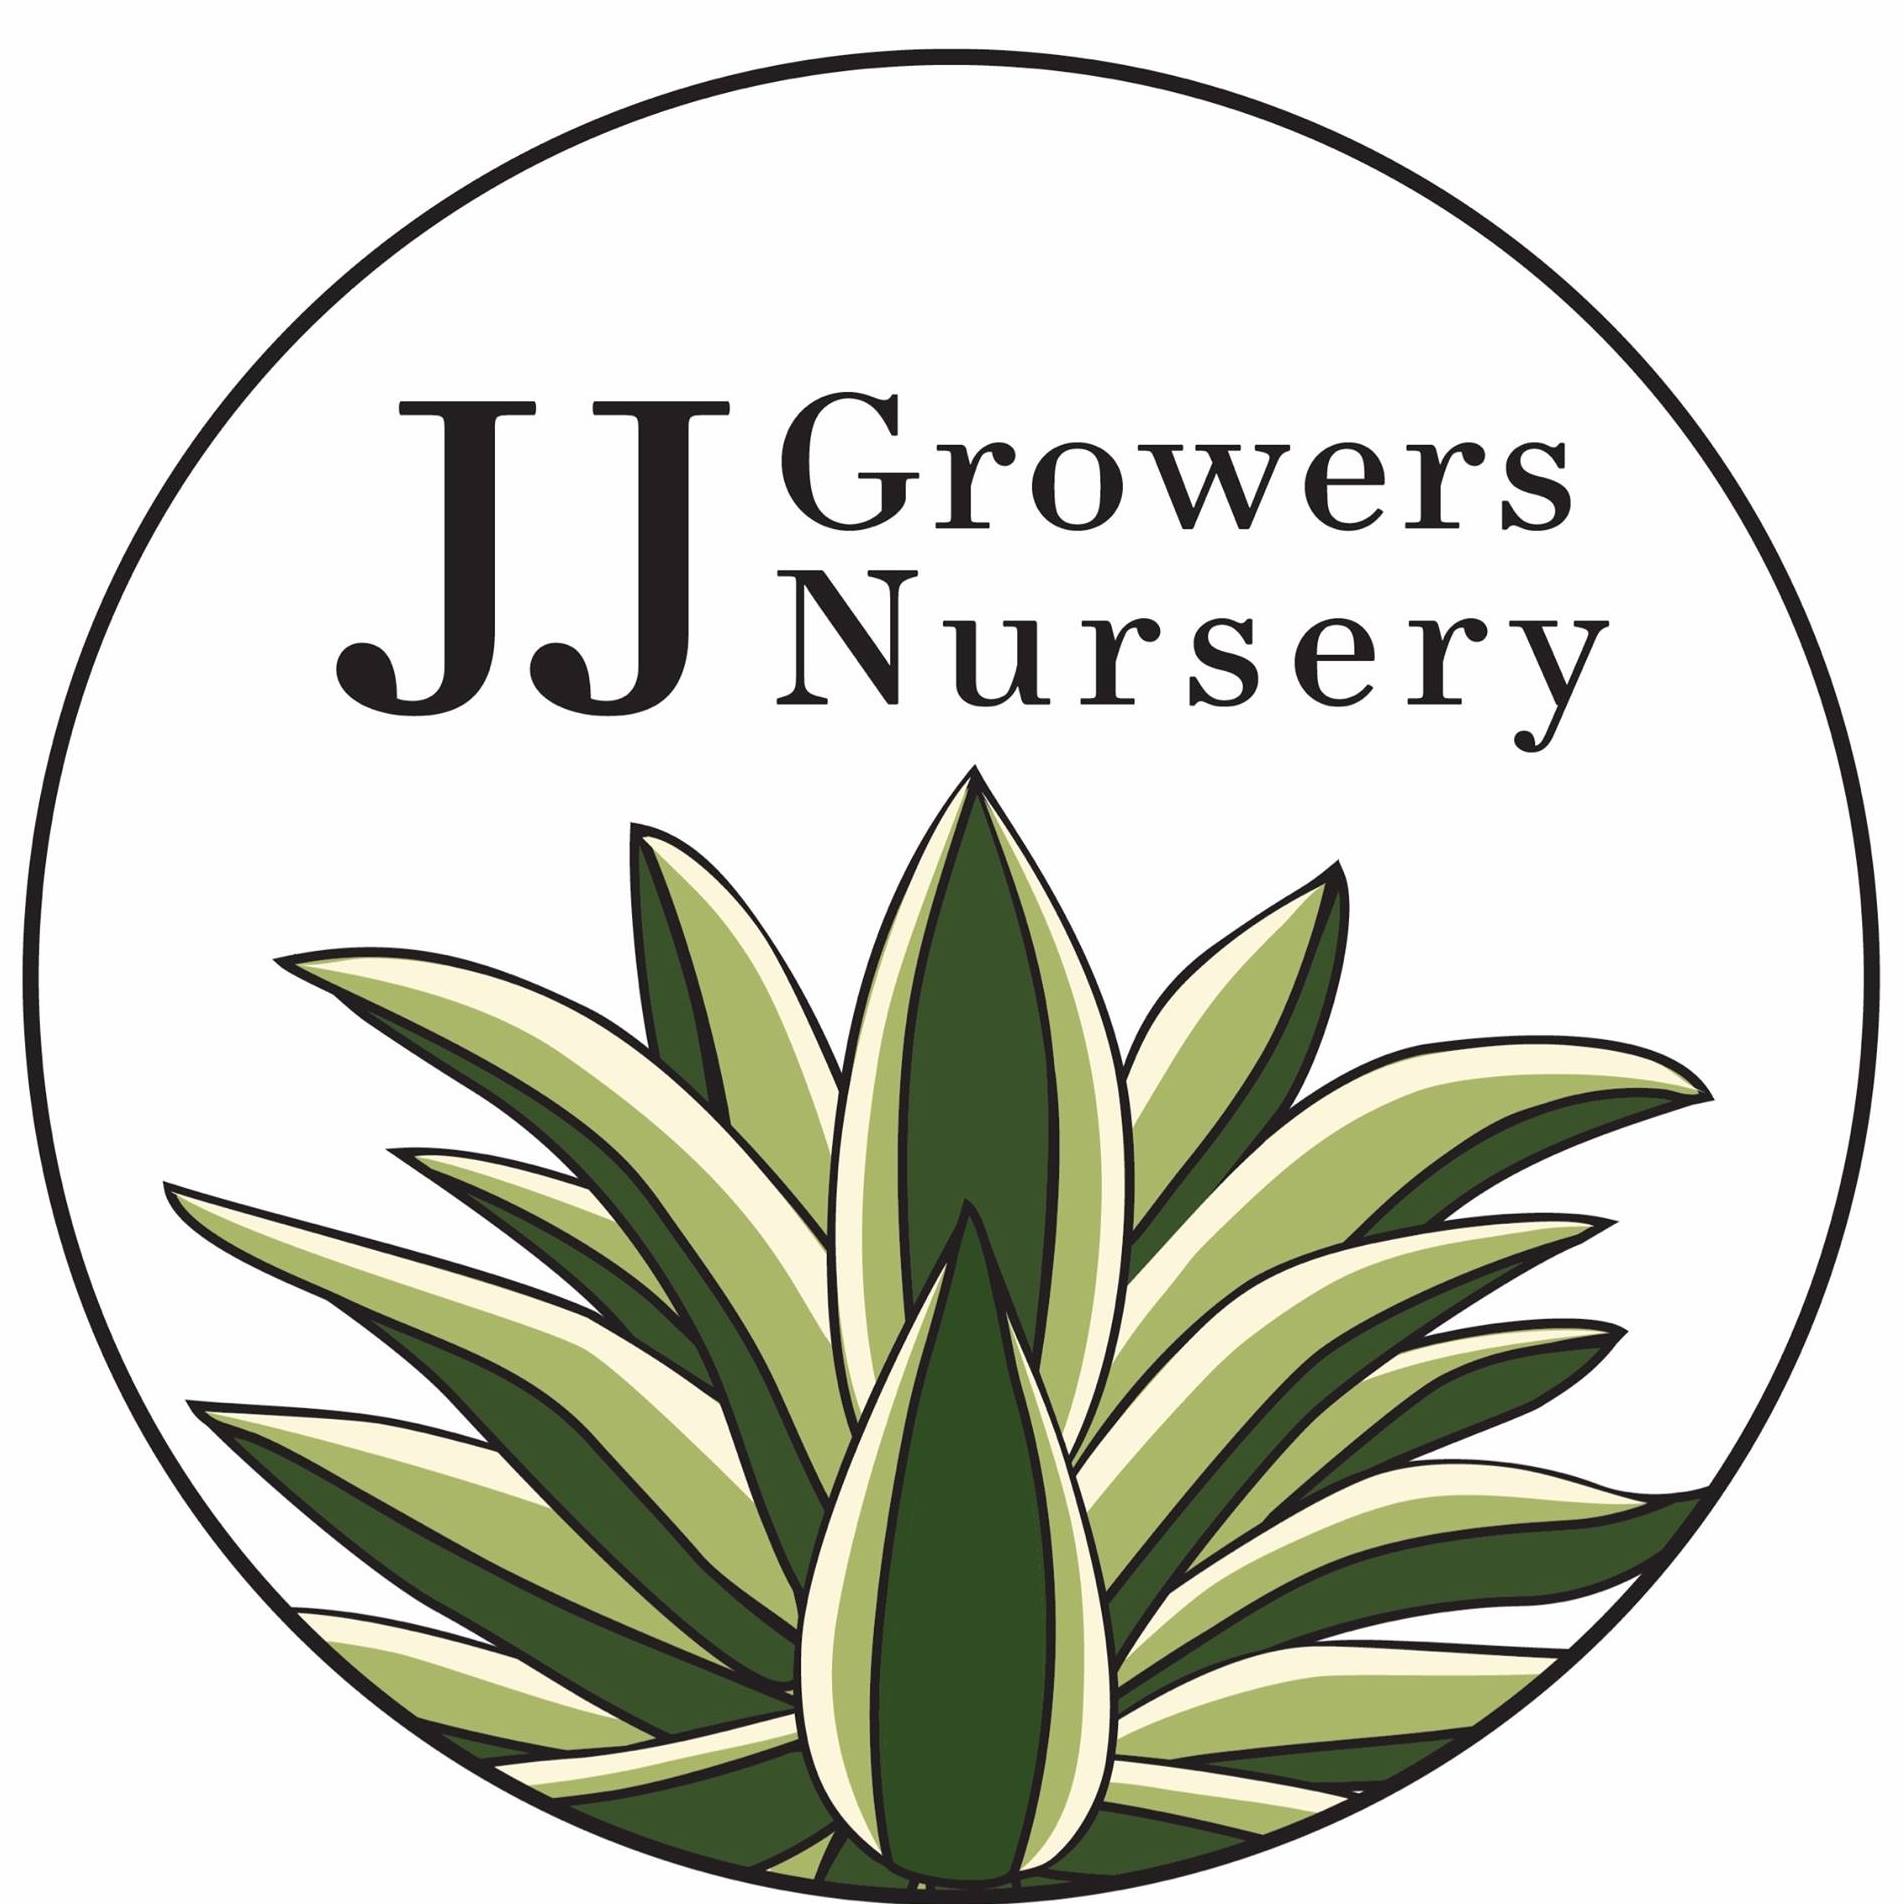 Company logo of JJ Growers Nursery